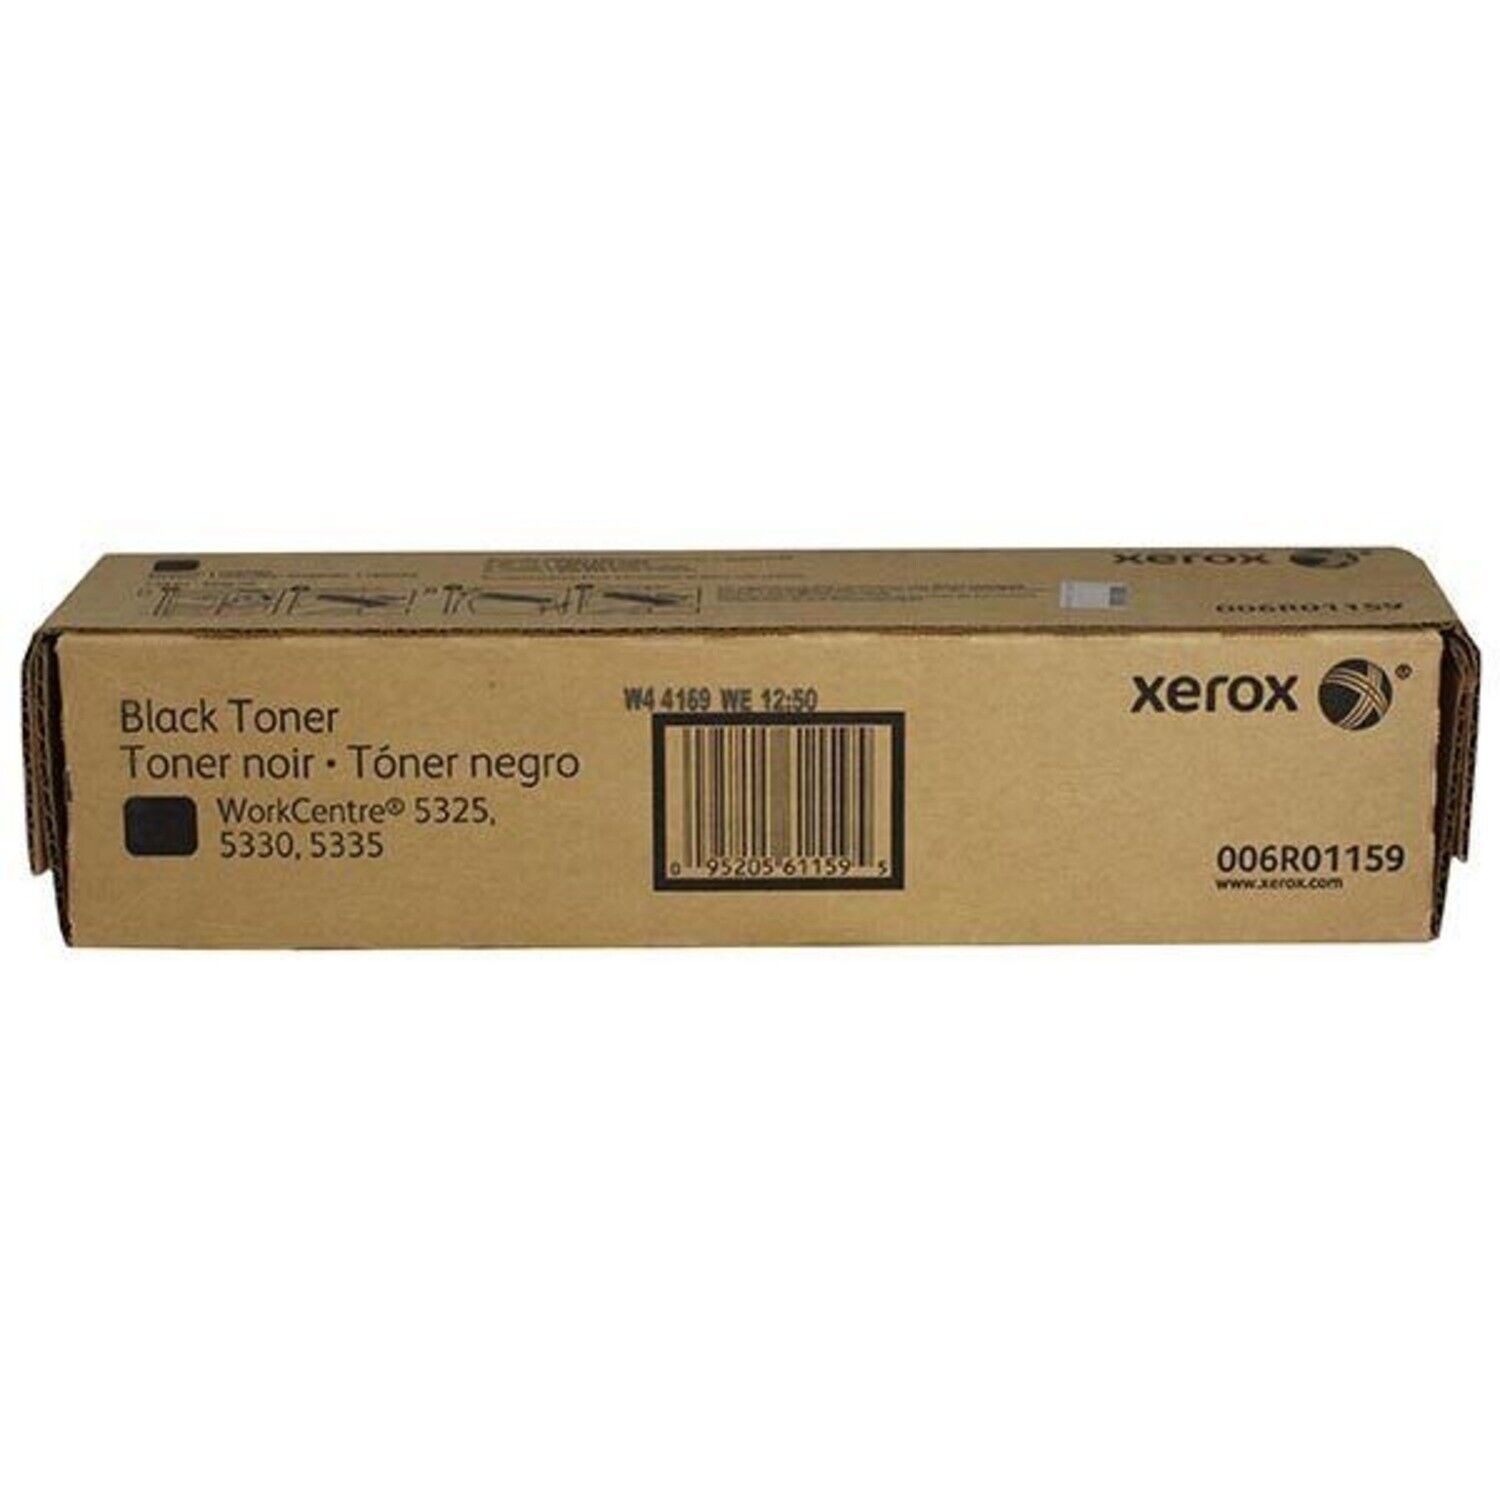 Genuine Xerox 006R01159 Black Toner Cartridge